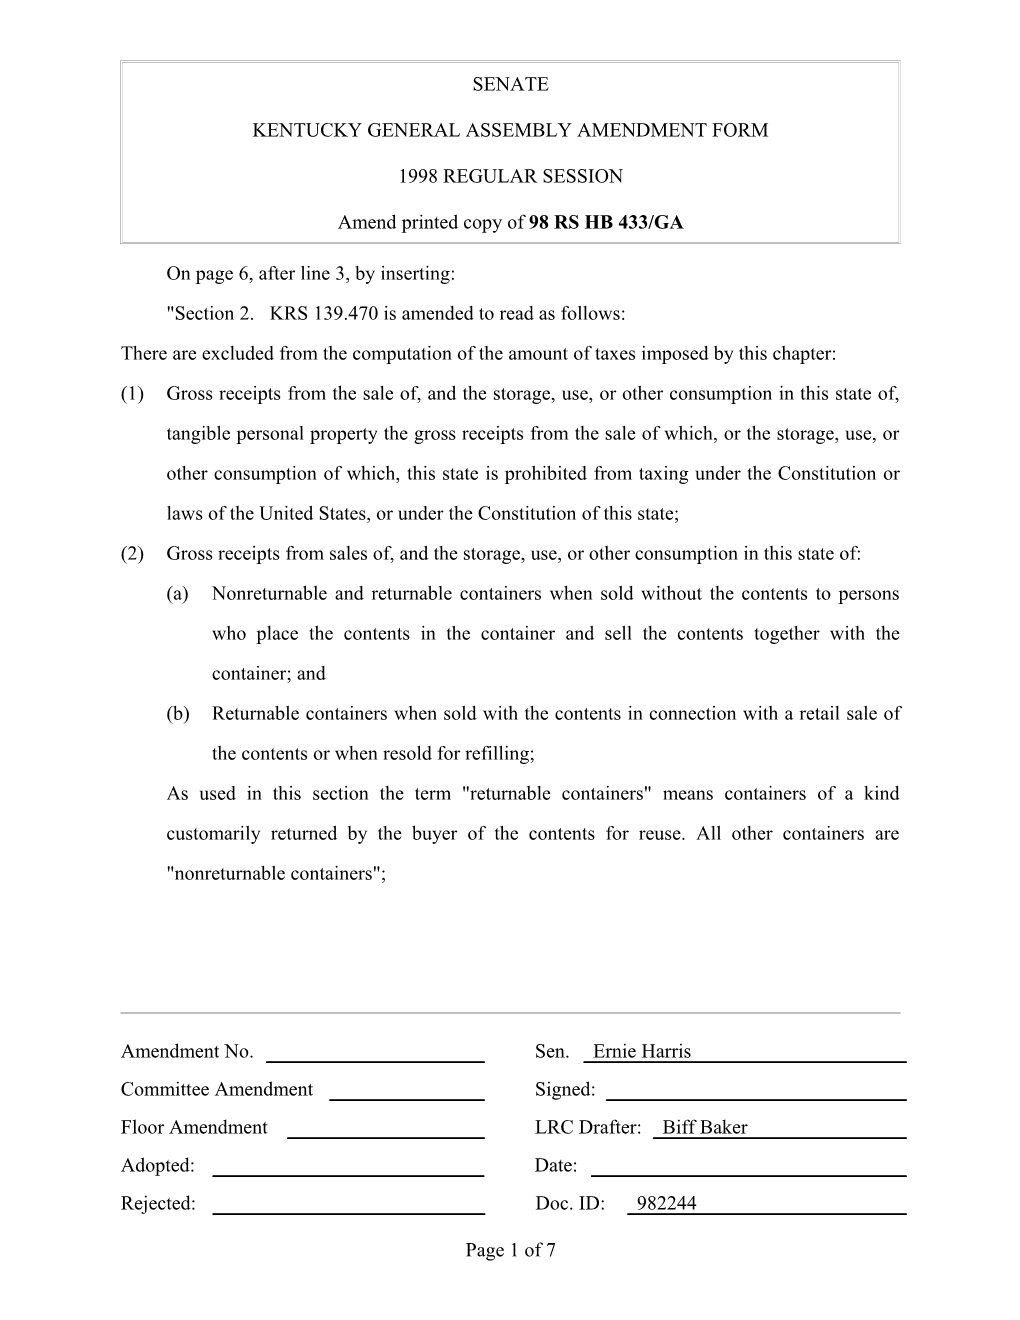 Kentucky General Assembly Amendment Form s1